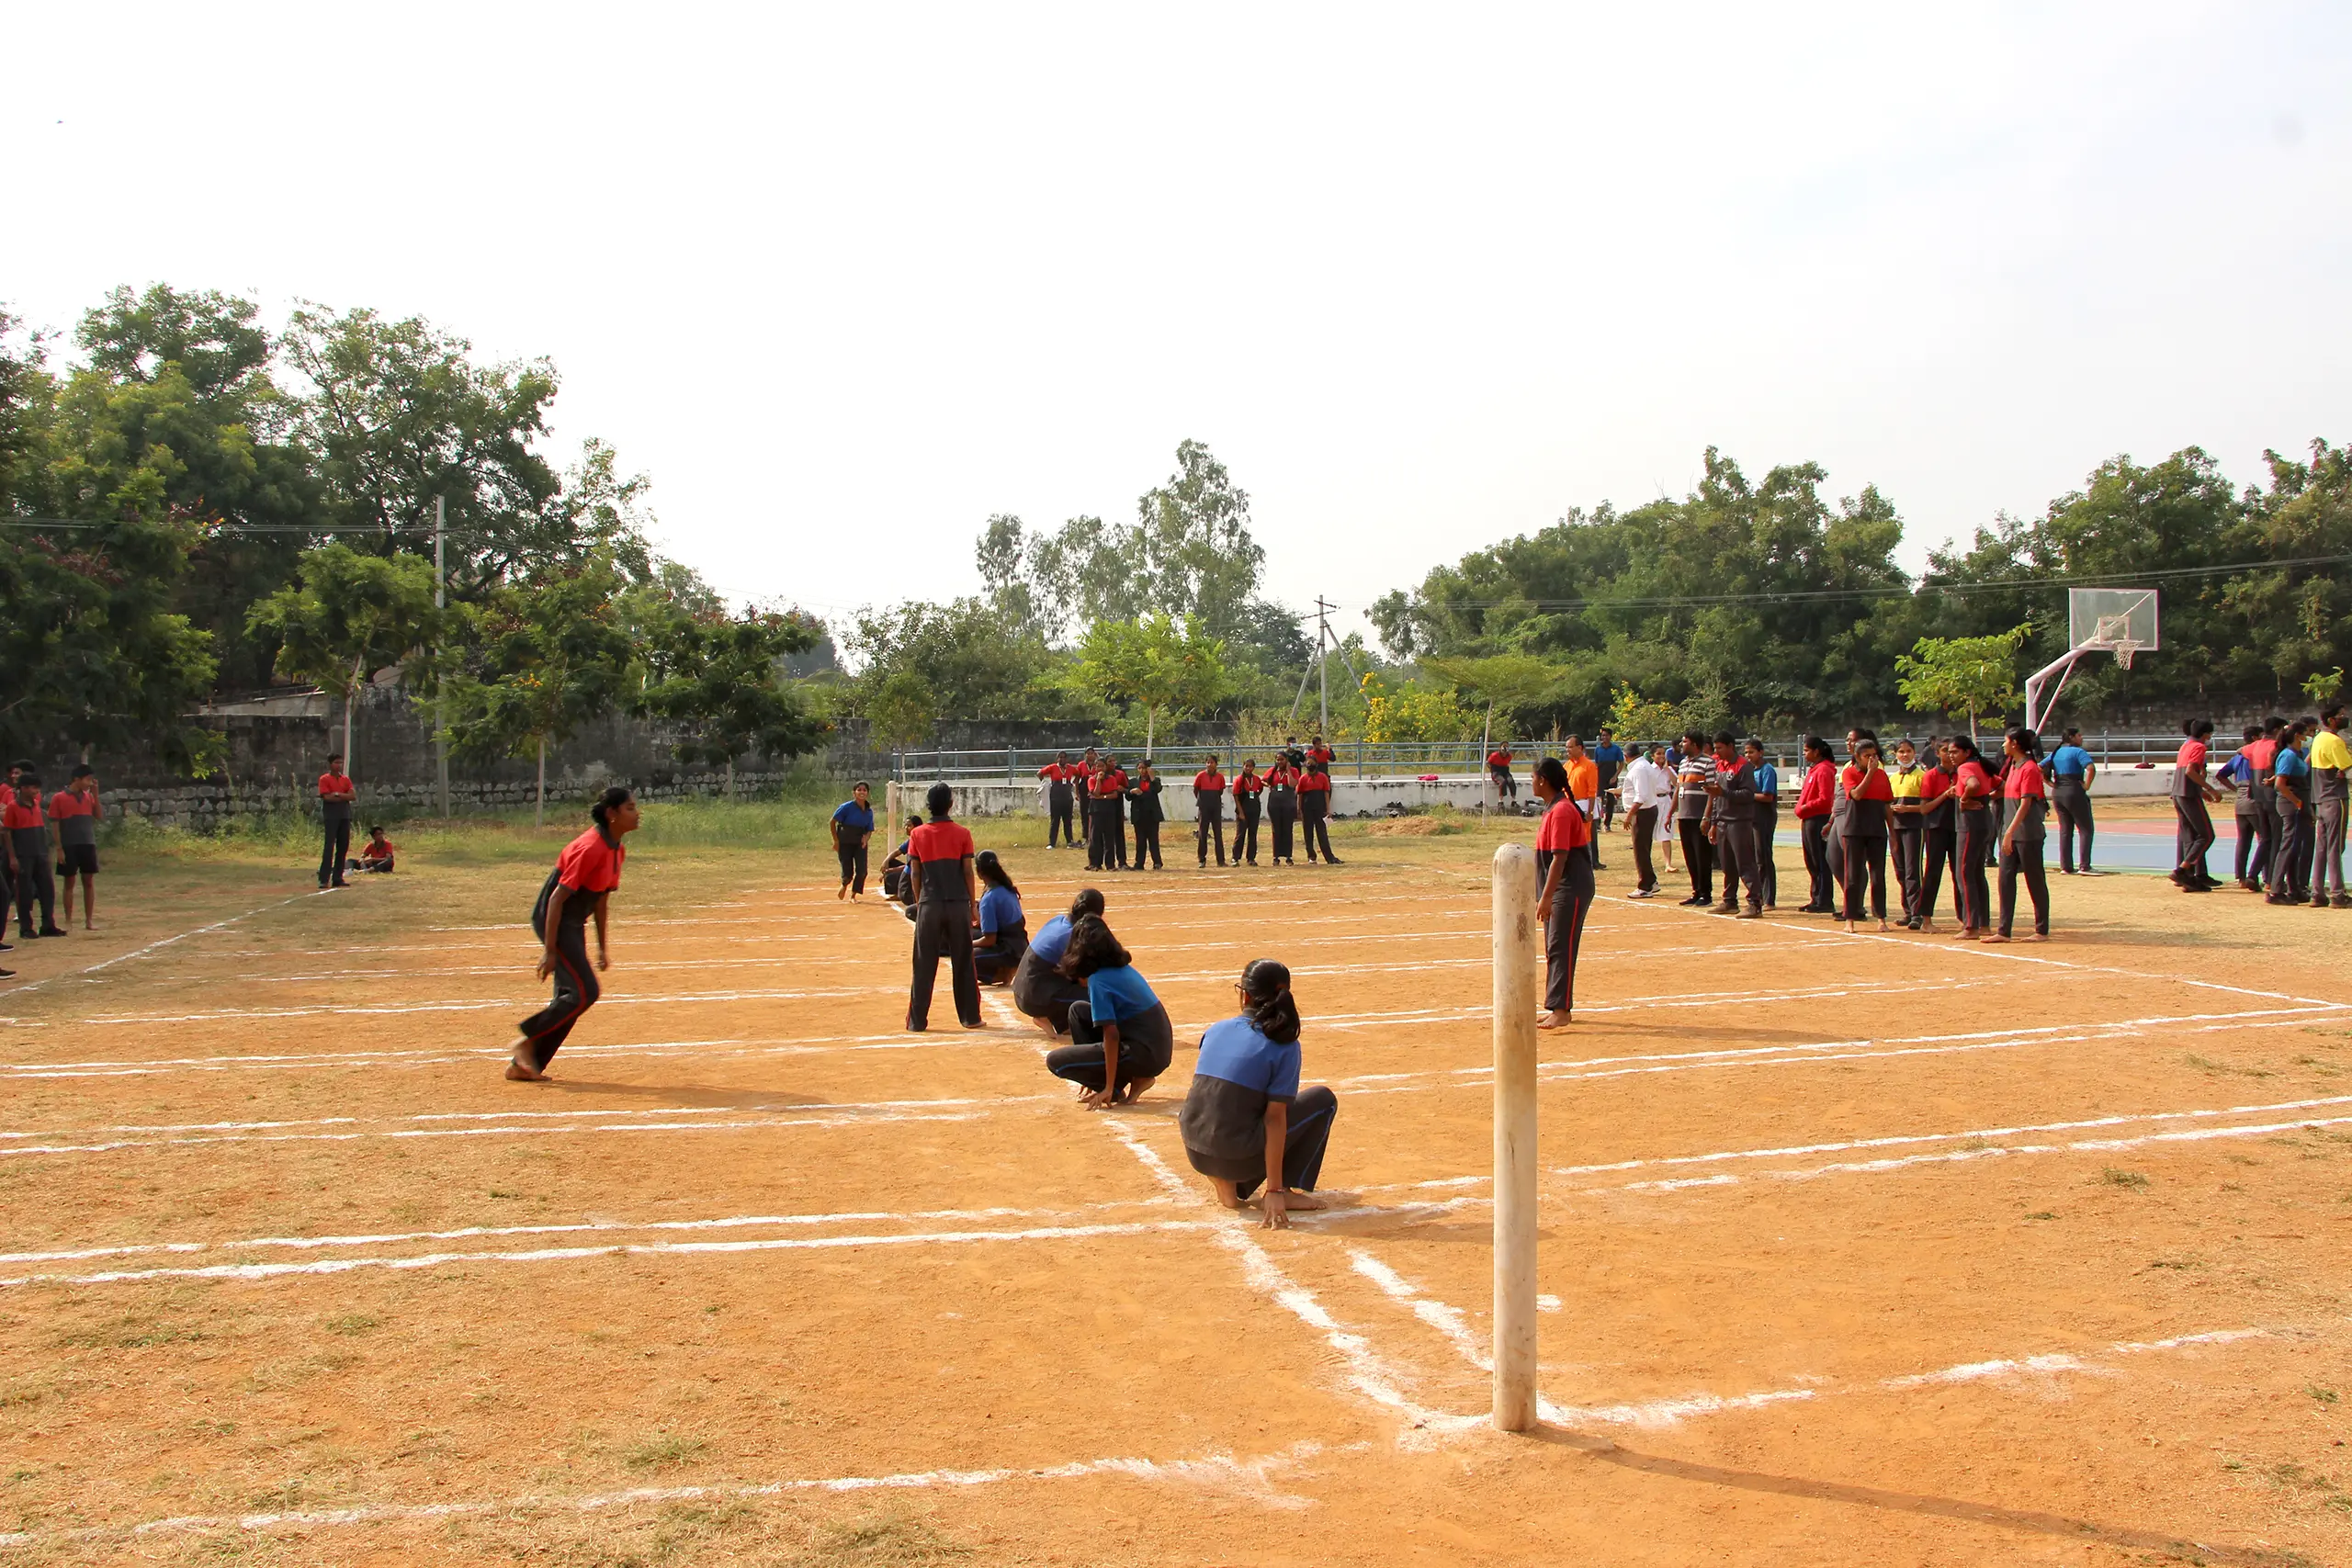 Students playing kho-kho on the ground at DPS Warangal.